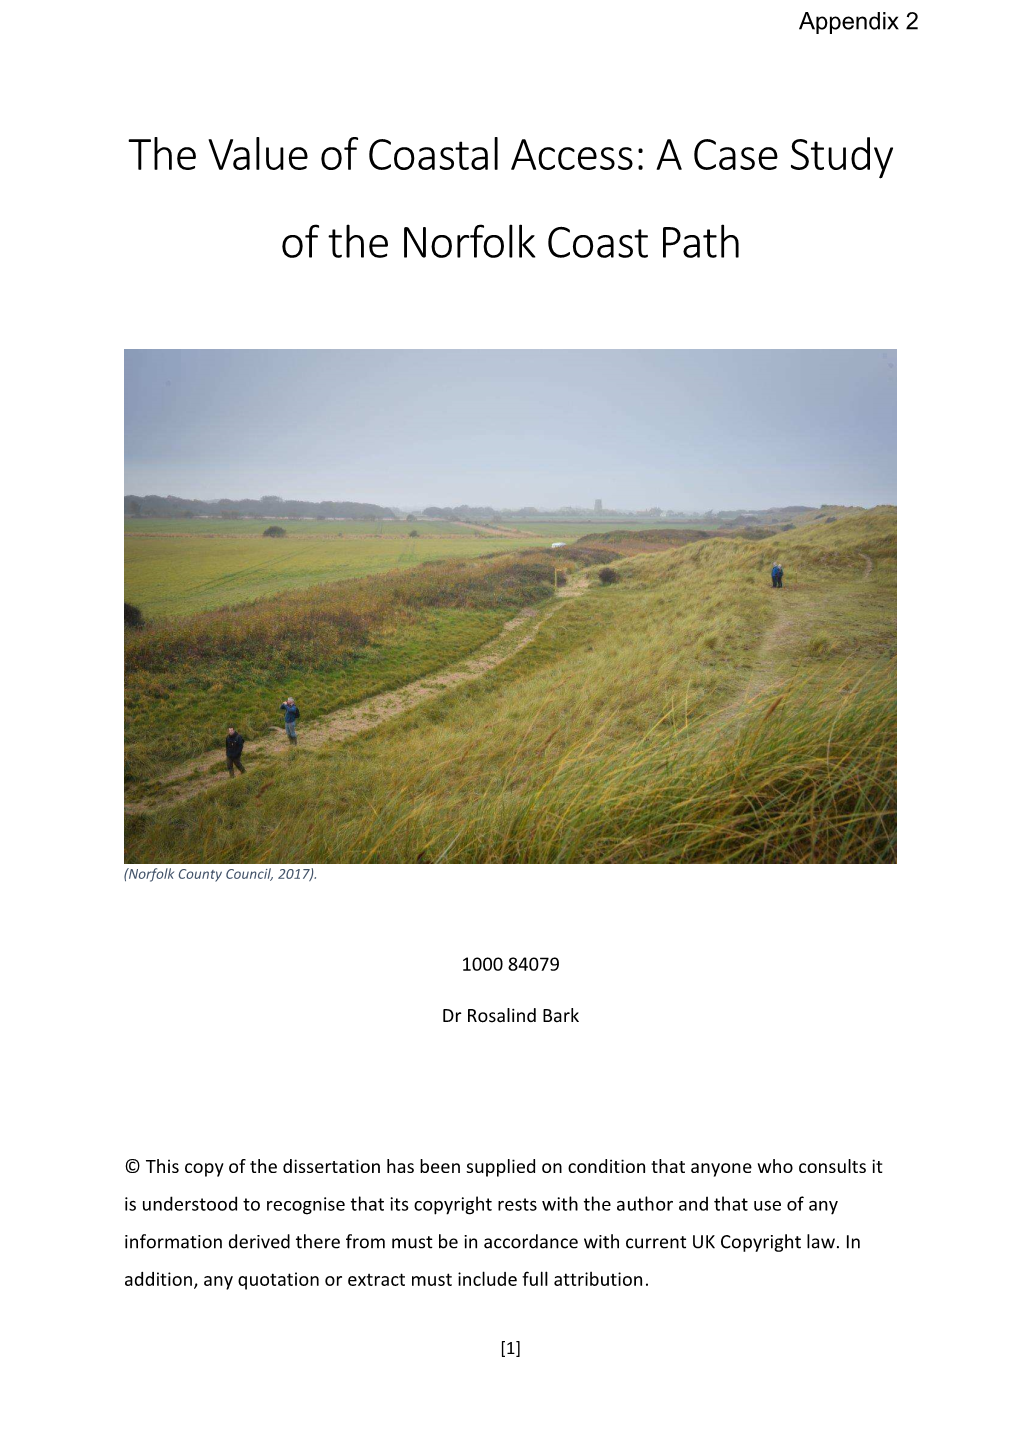 The Value of Coastal Access: a Case Study of the Norfolk Coast Path